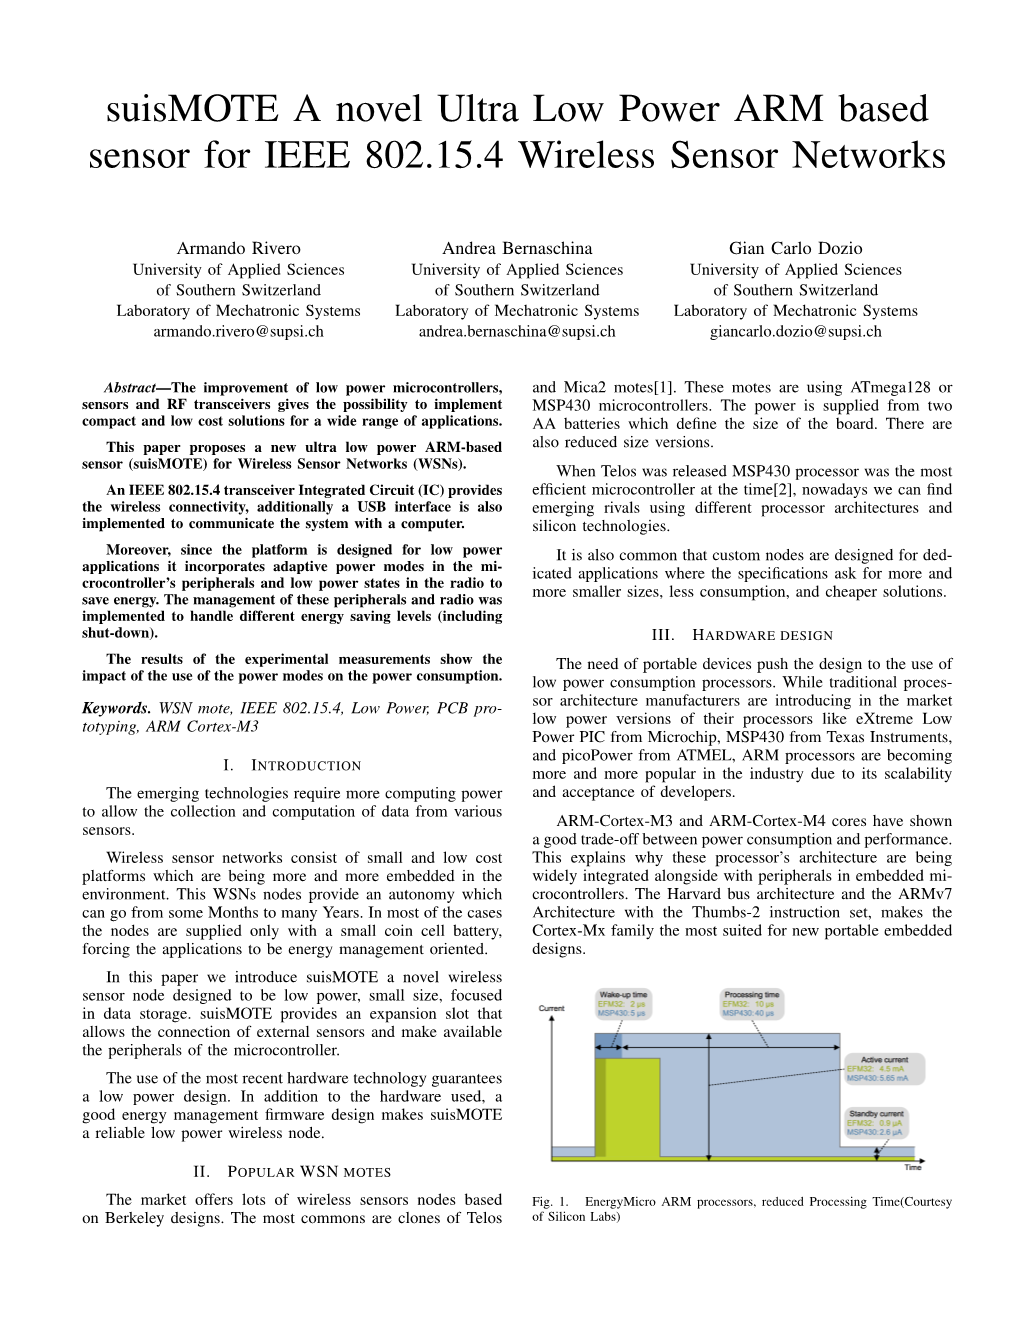 Suismote a Novel Ultra Low Power ARM Based Sensor for IEEE 802.15.4 Wireless Sensor Networks